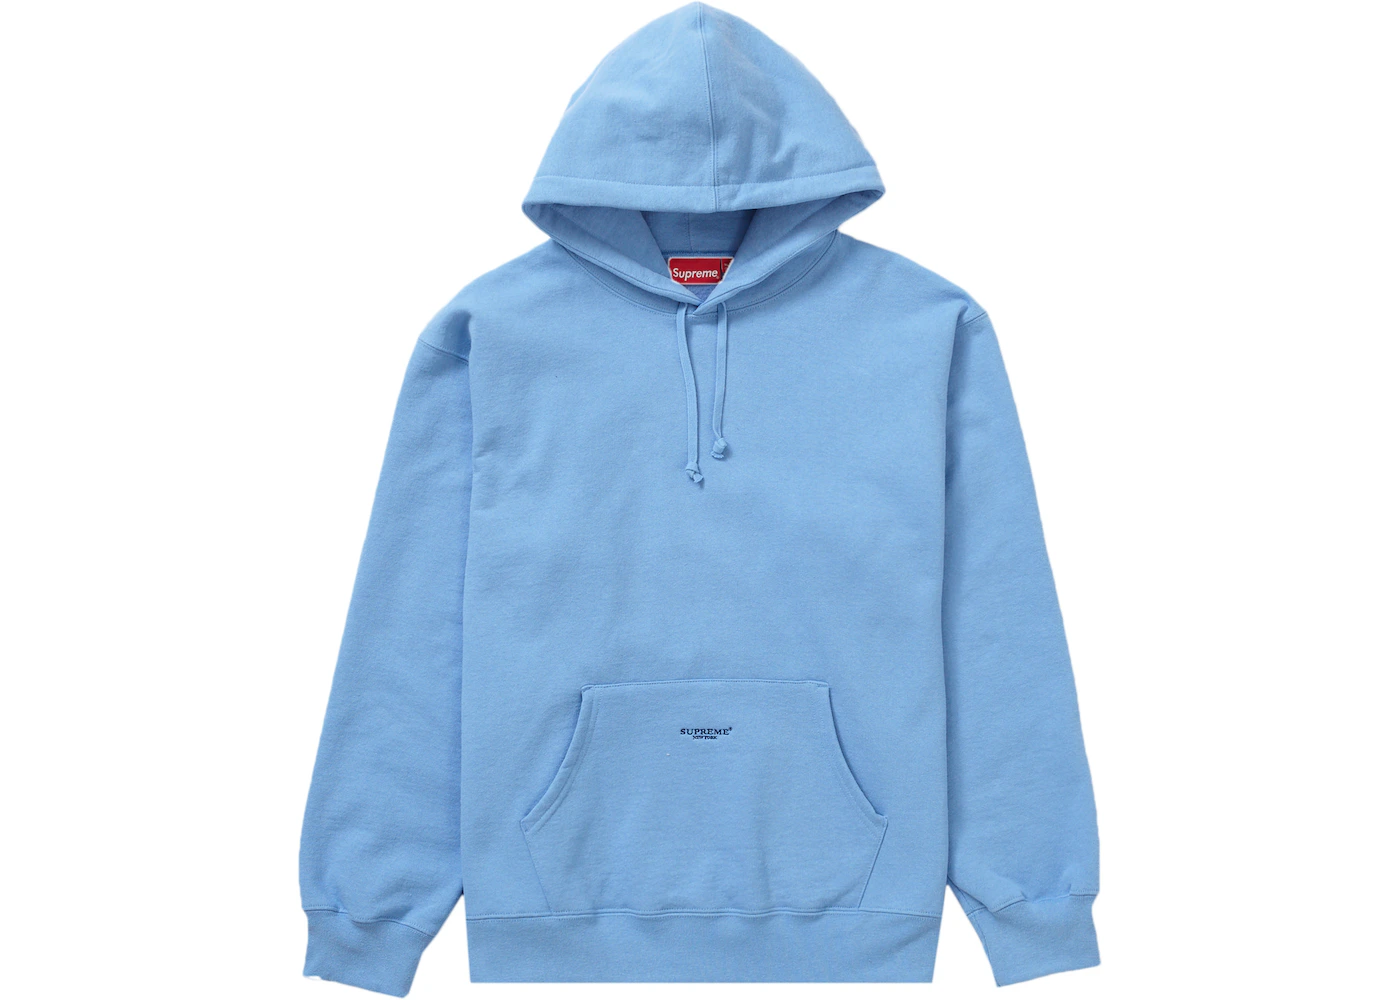 supreme louis vuitton hoodie blue